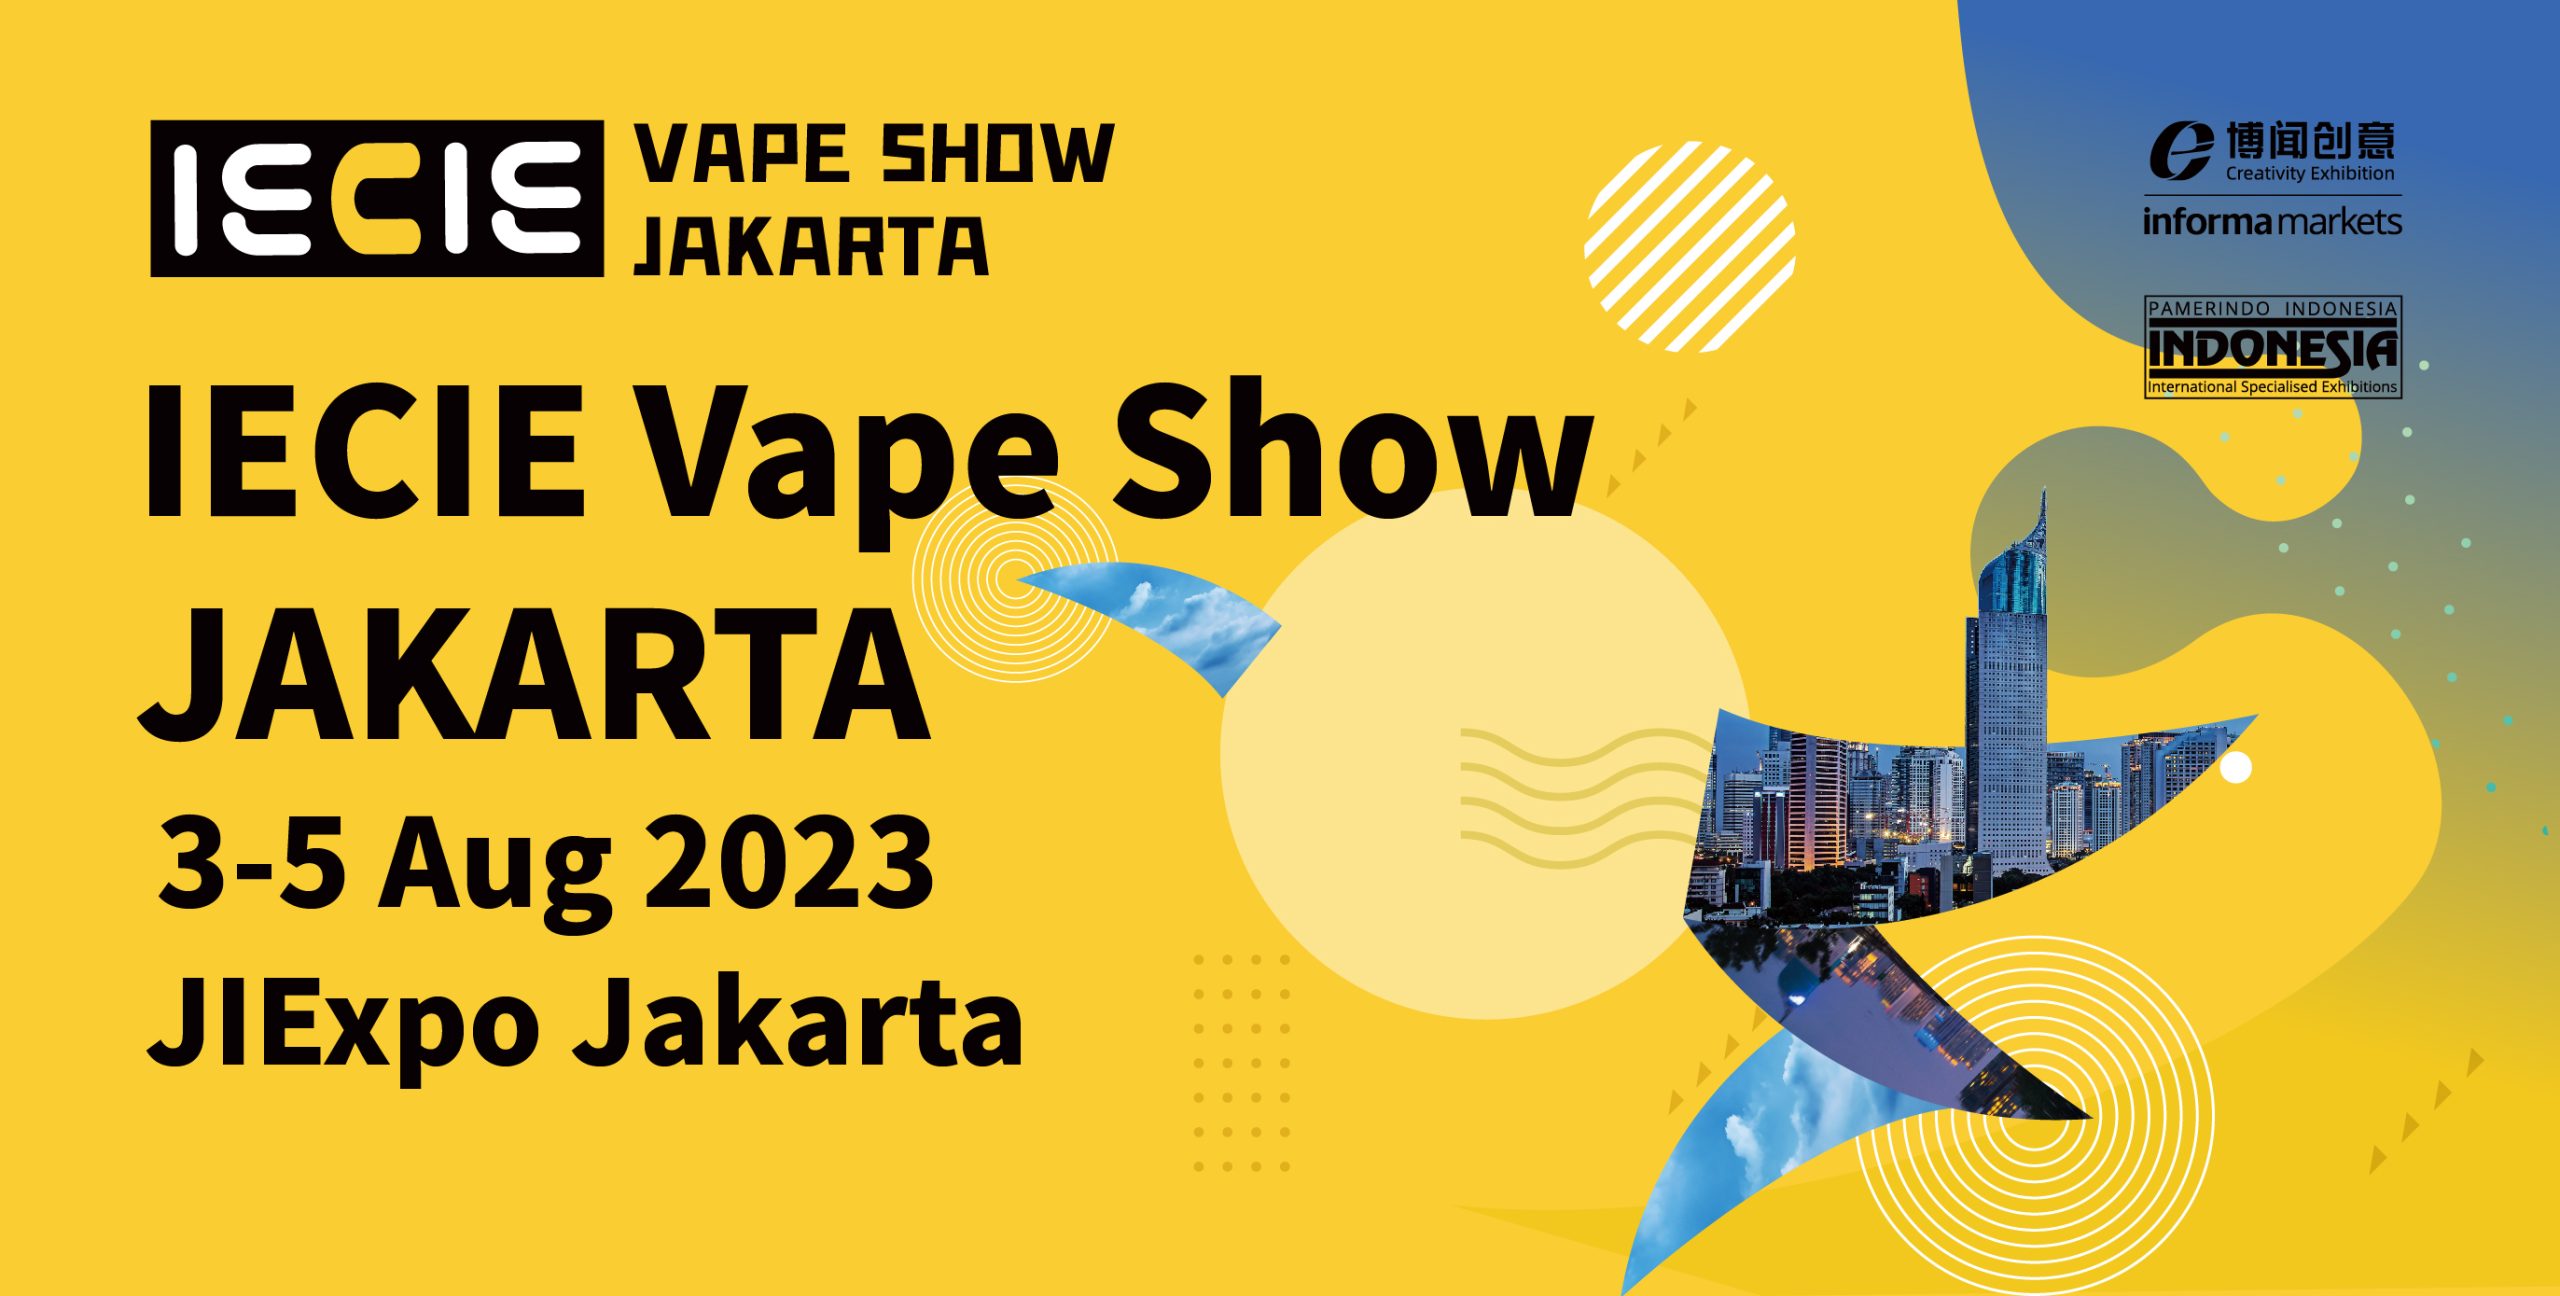 IECIE VAPE SHOW JAKARTA 2023 - JAKARTA INTERNATIONAL EXPO